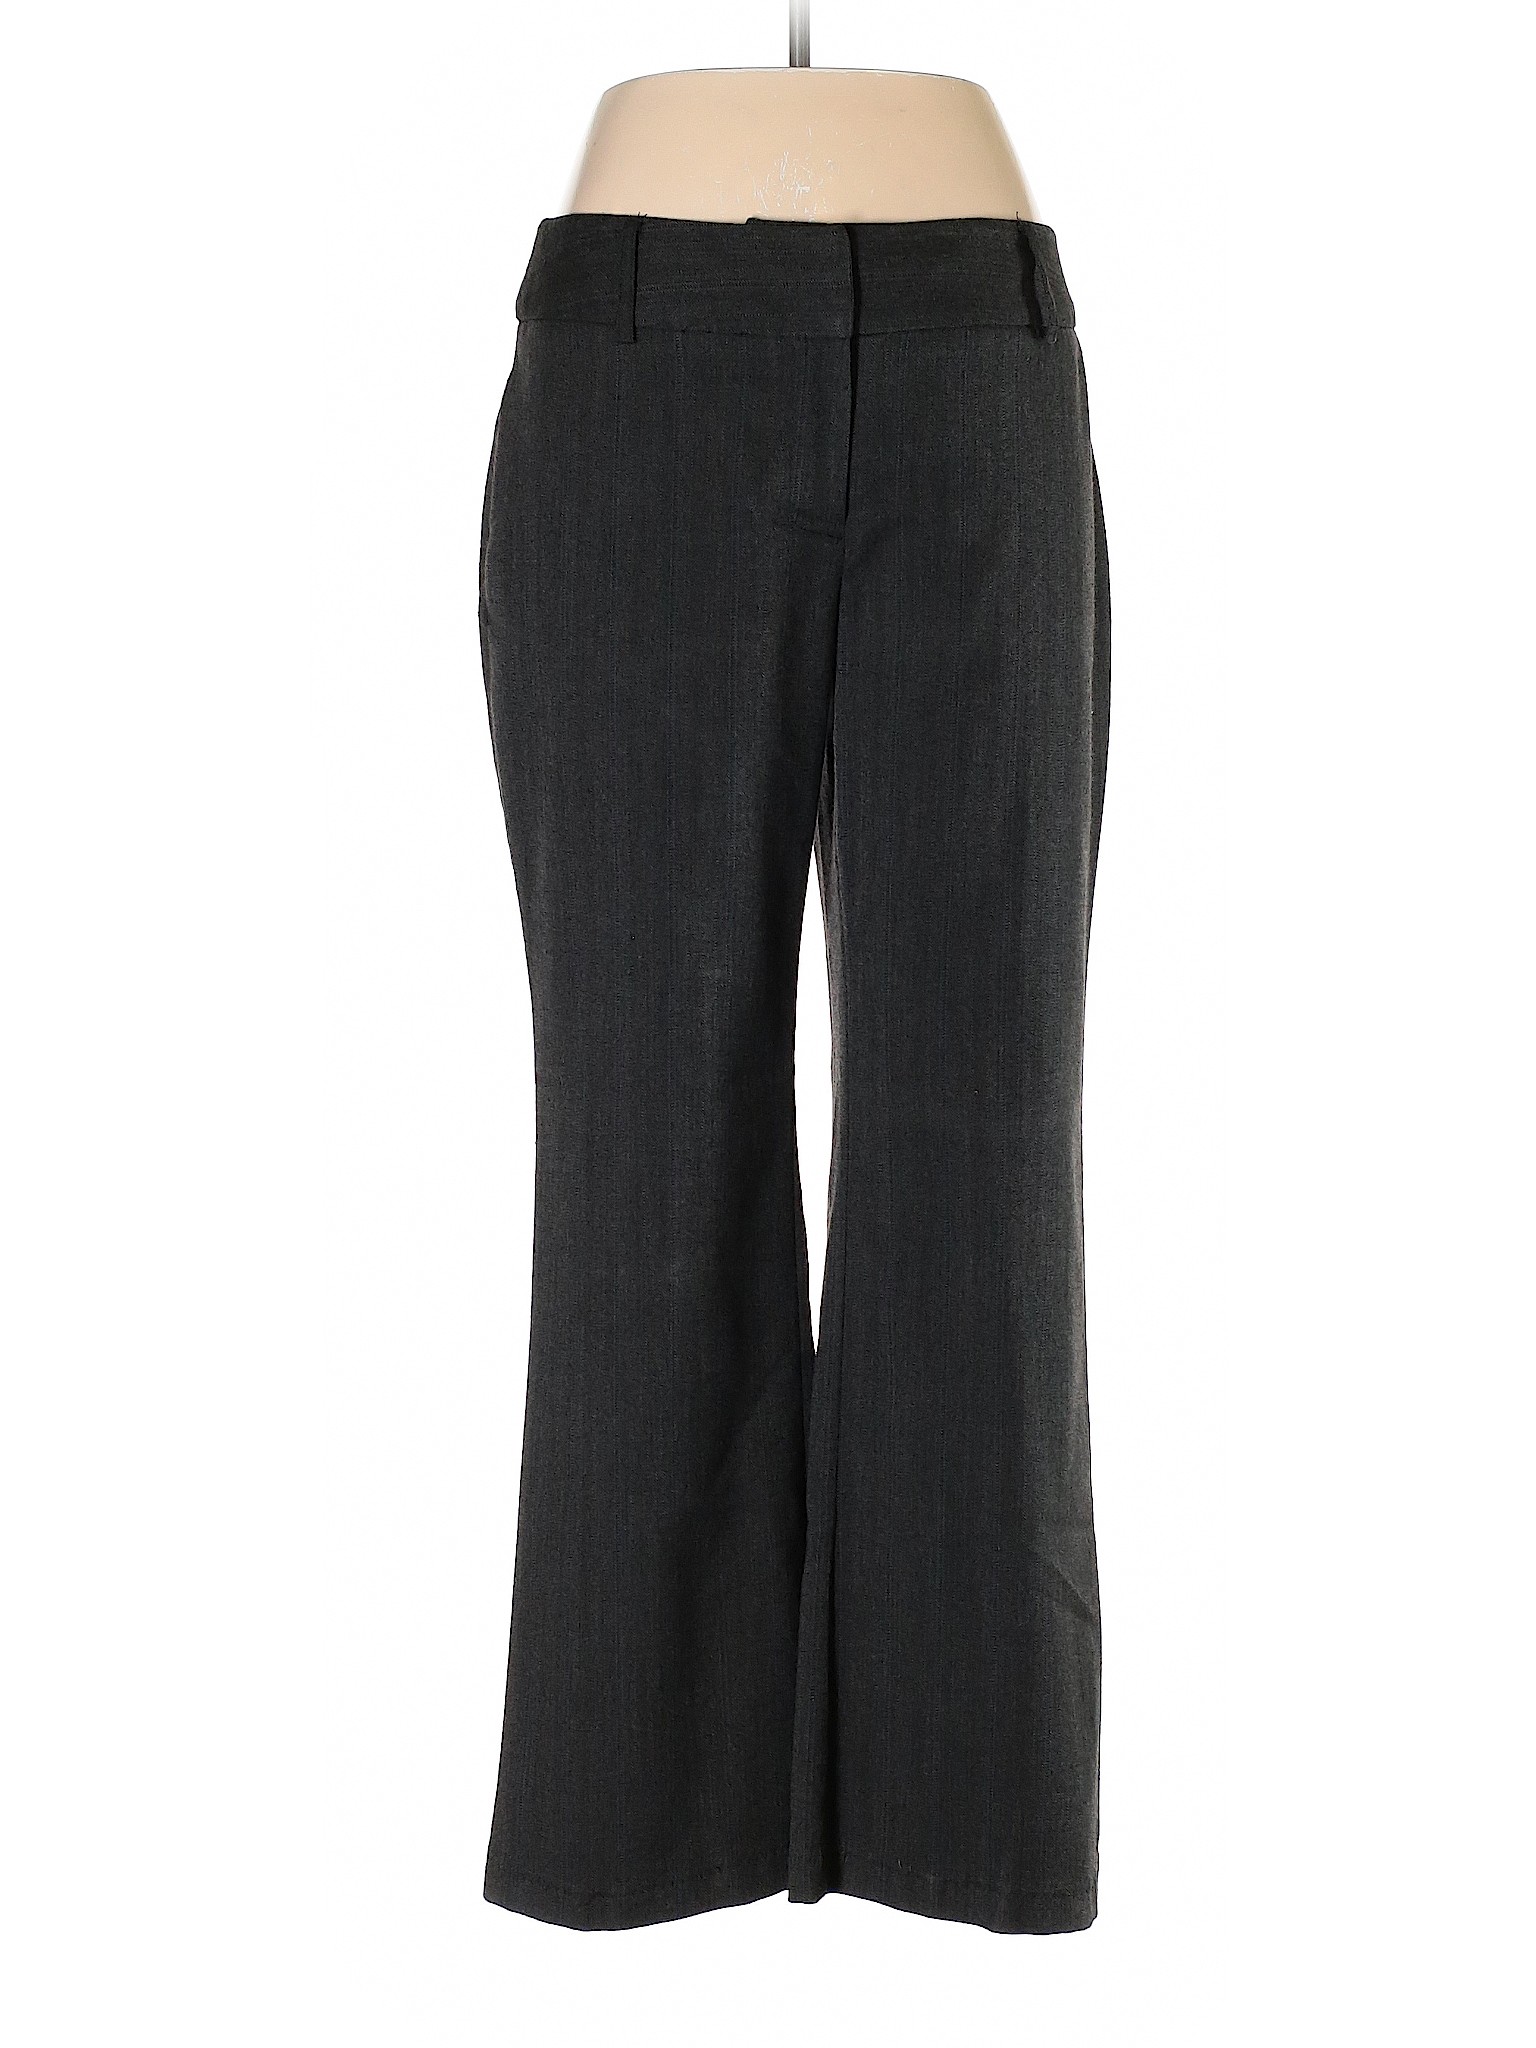 Apt. 9 Women Black Dress Pants 10 | eBay